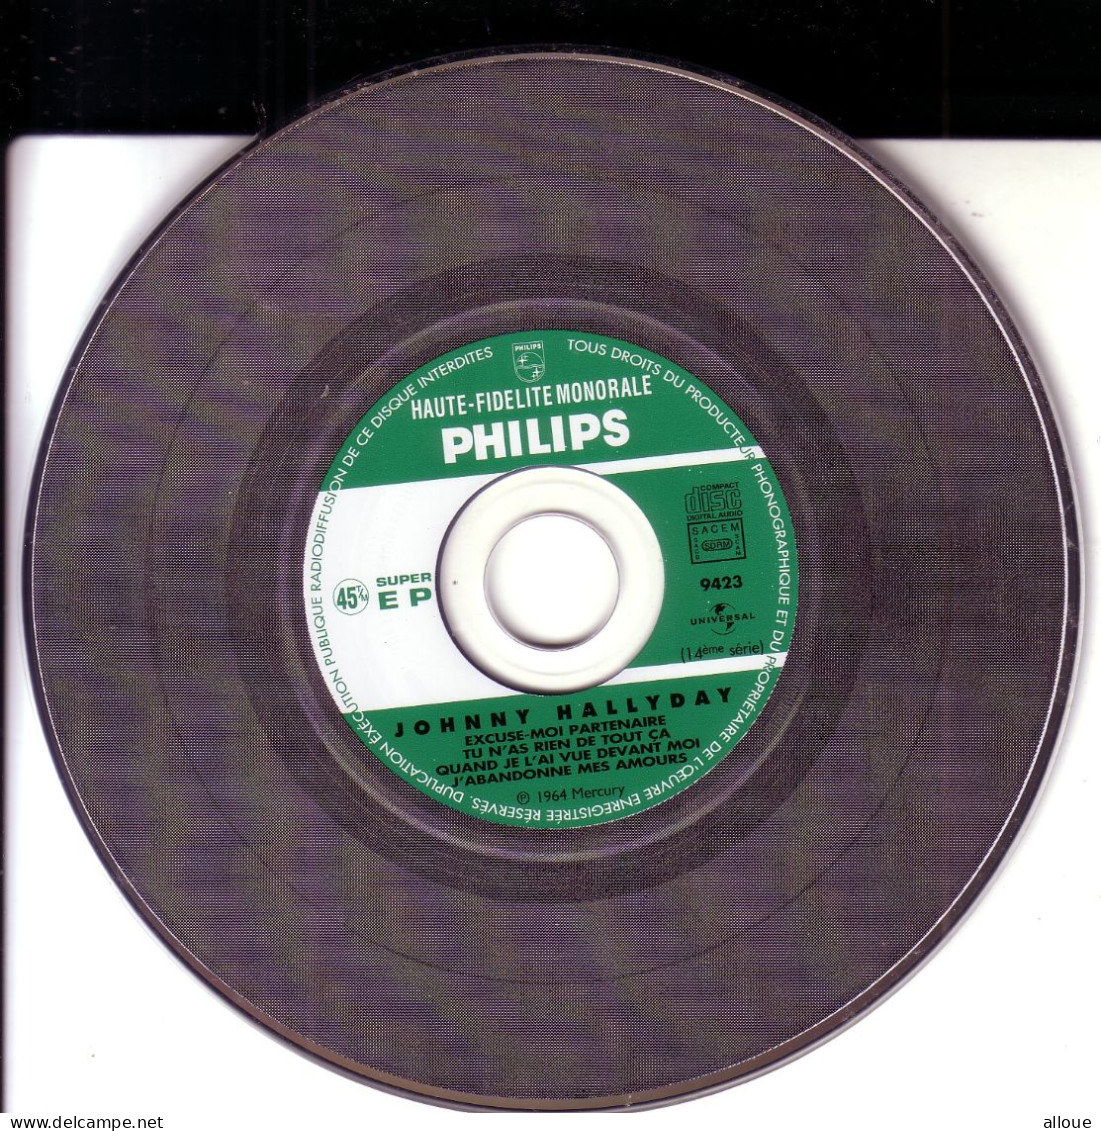 JOHNNY HALLYDAY CD EP EXCUSE-MOI PARTENAIRE + 3 - Andere - Franstalig